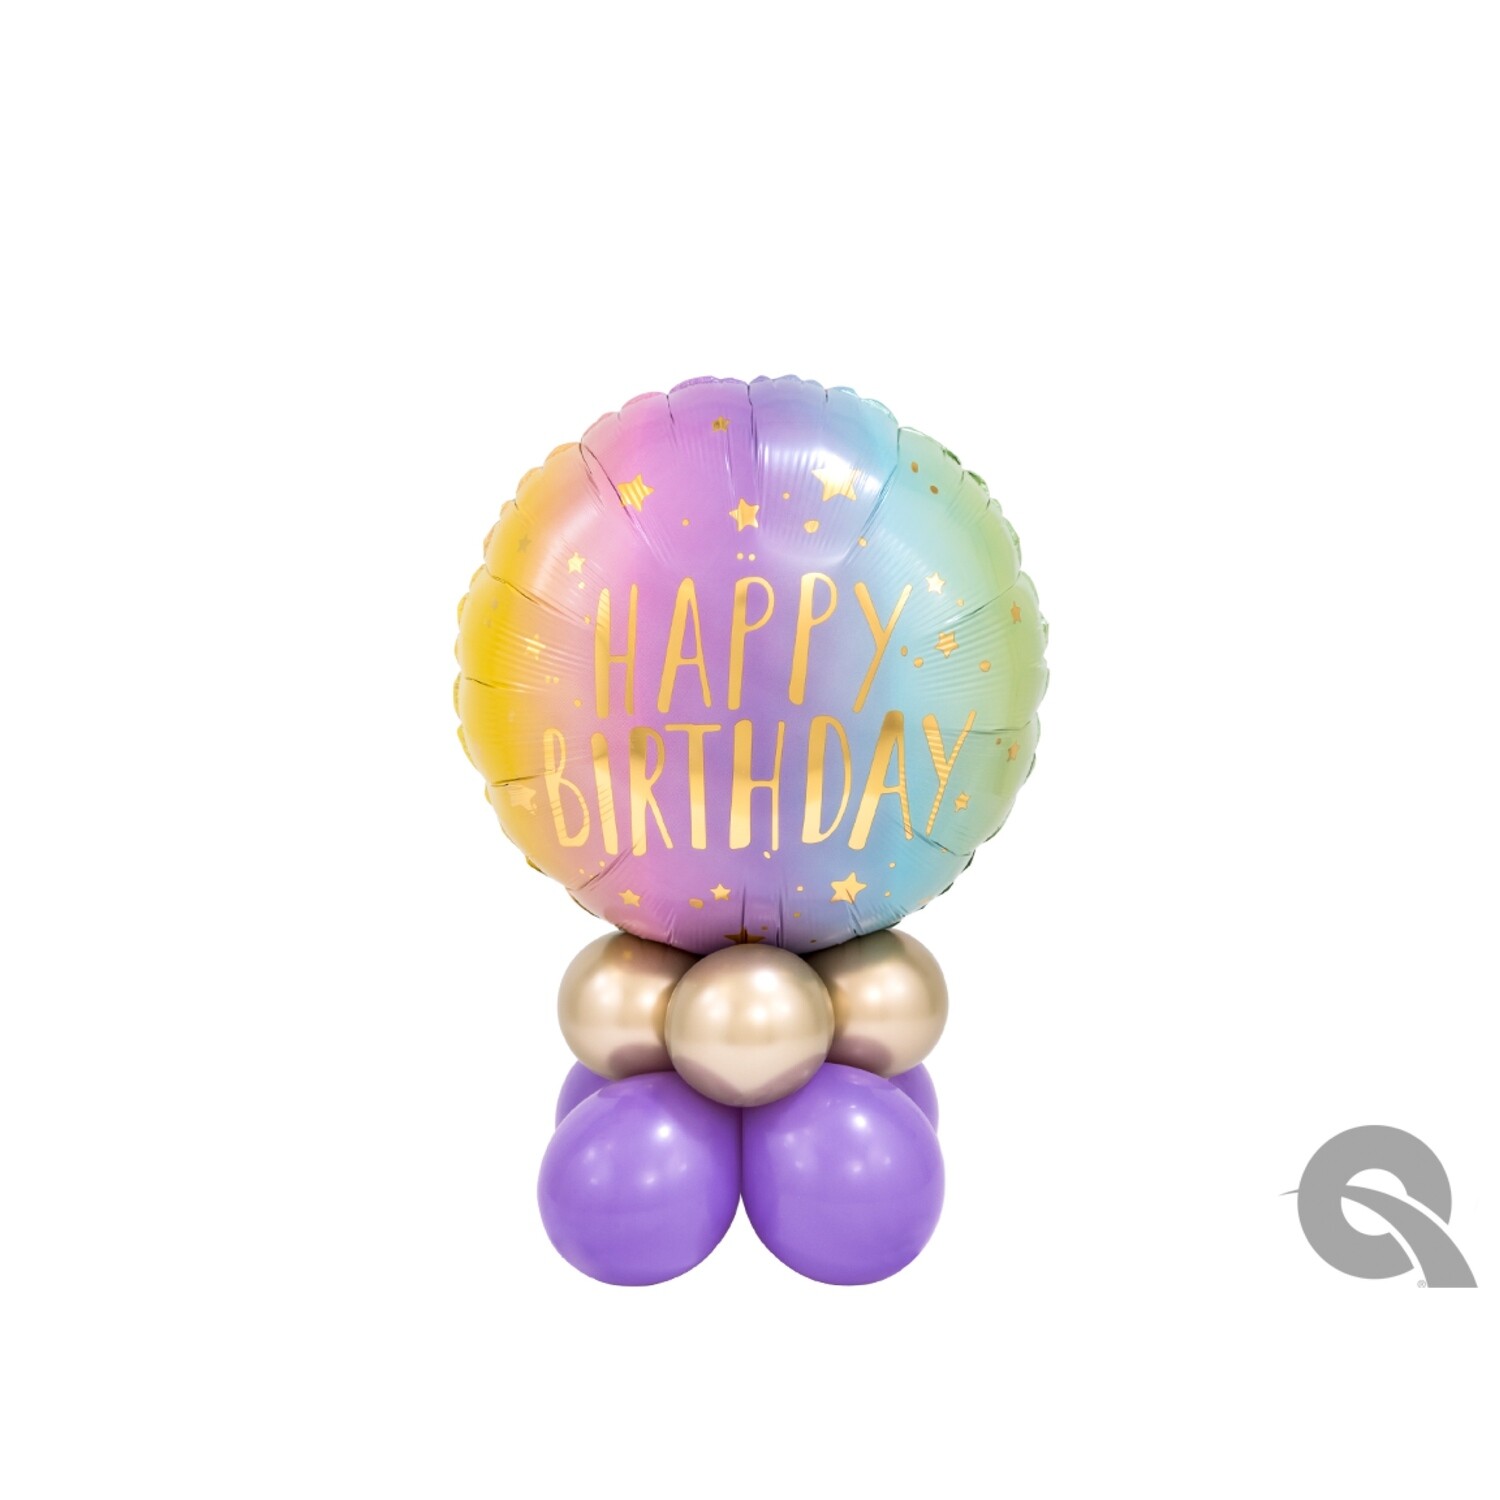 Happy Birthday Ombré Cake Balloon Bouquet Designs